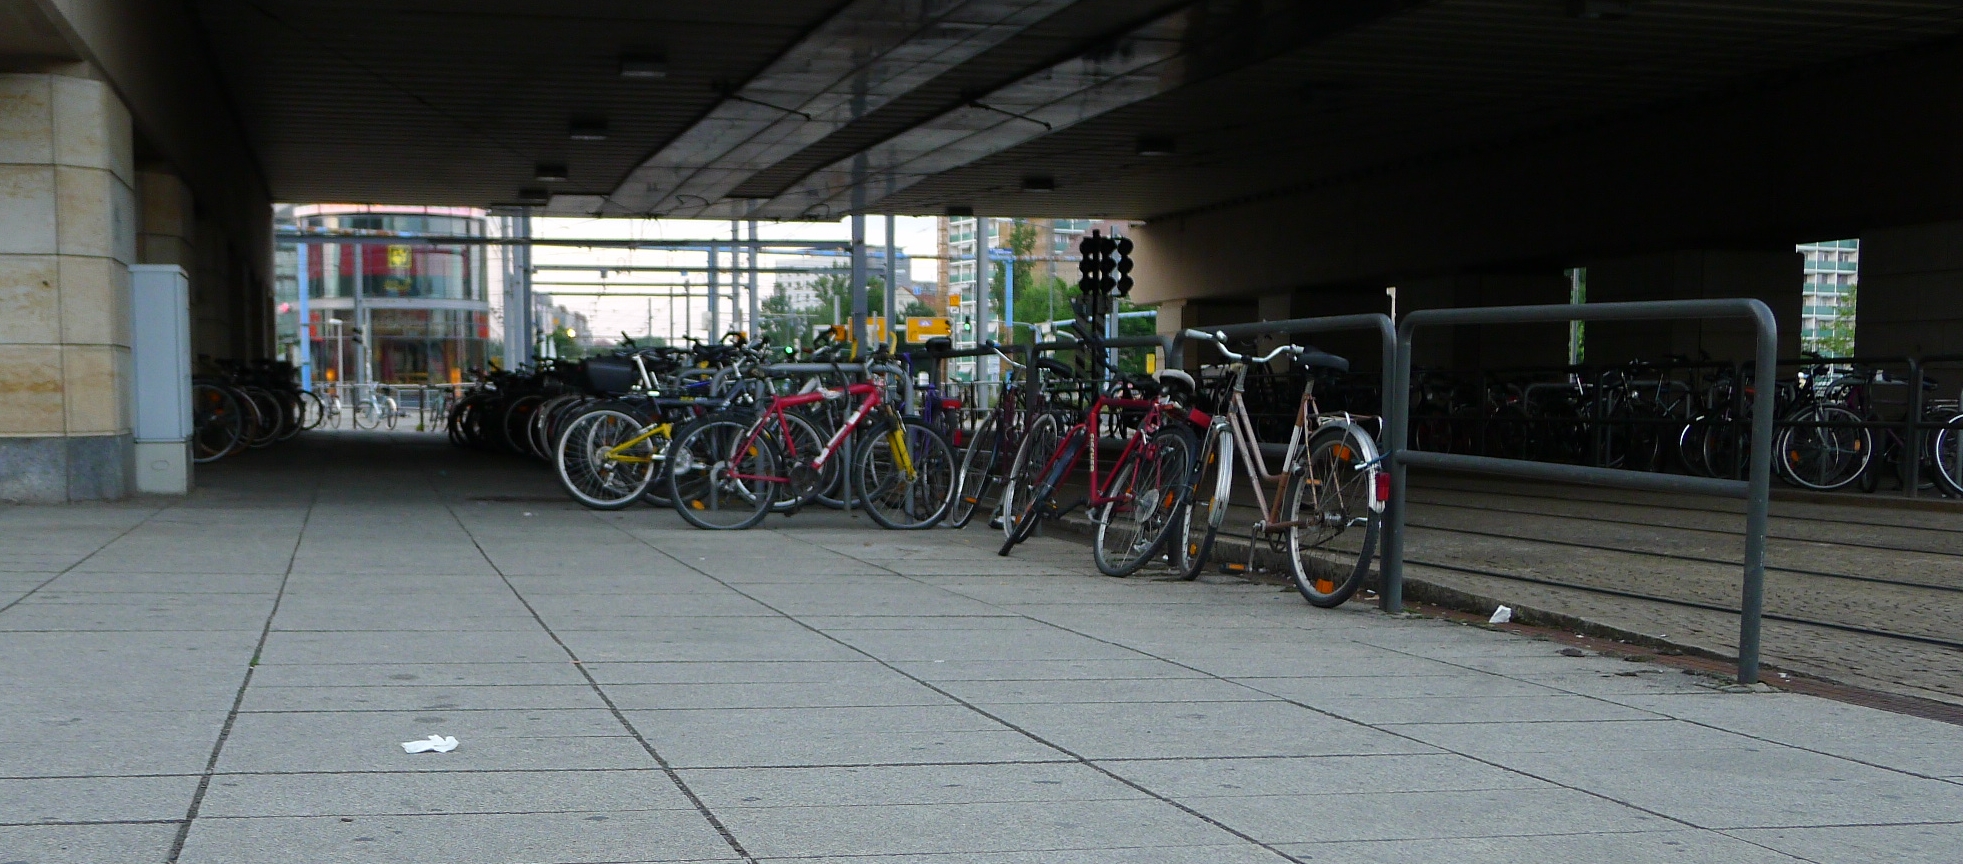 Fahrradparkplatzmangel Hbf © ADFC <a href='https://www.flickr.com/photos/adfcsachsen/7307901804/in/photostream/'>LINK</a>